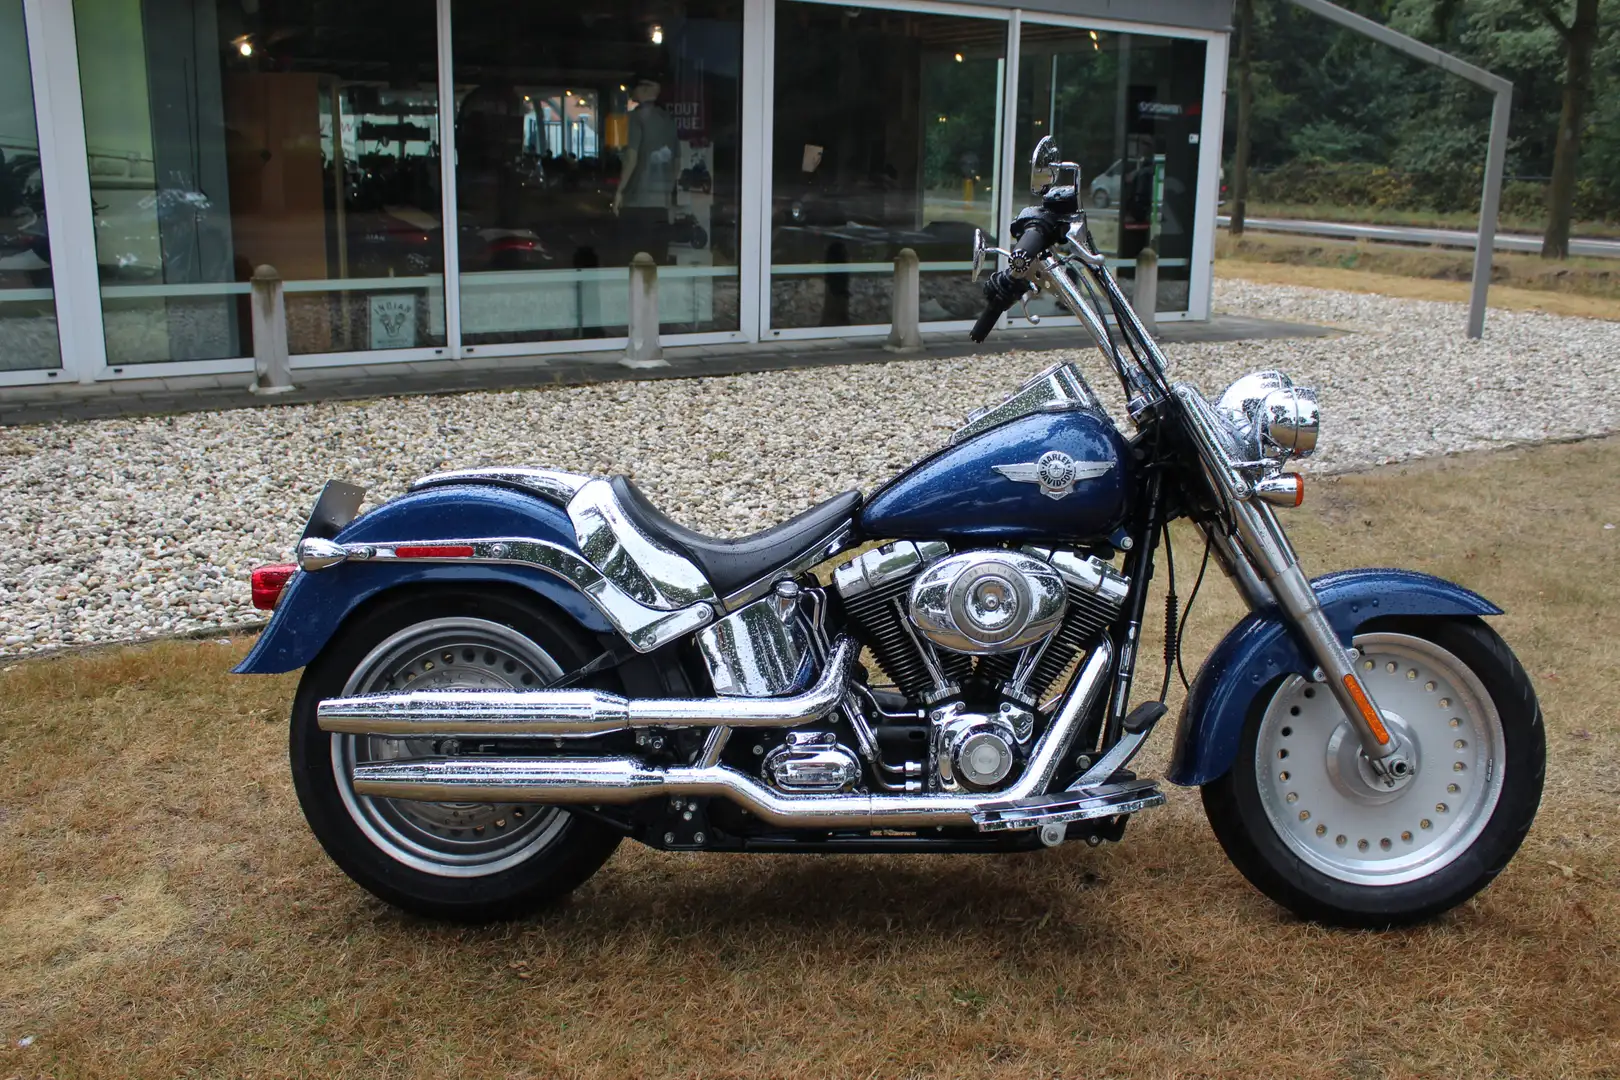 omvang Grondig bad Harley-Davidson Softail Chopper/Cruiser in Blauw gebruikt in VENLO voor €  9.950,-